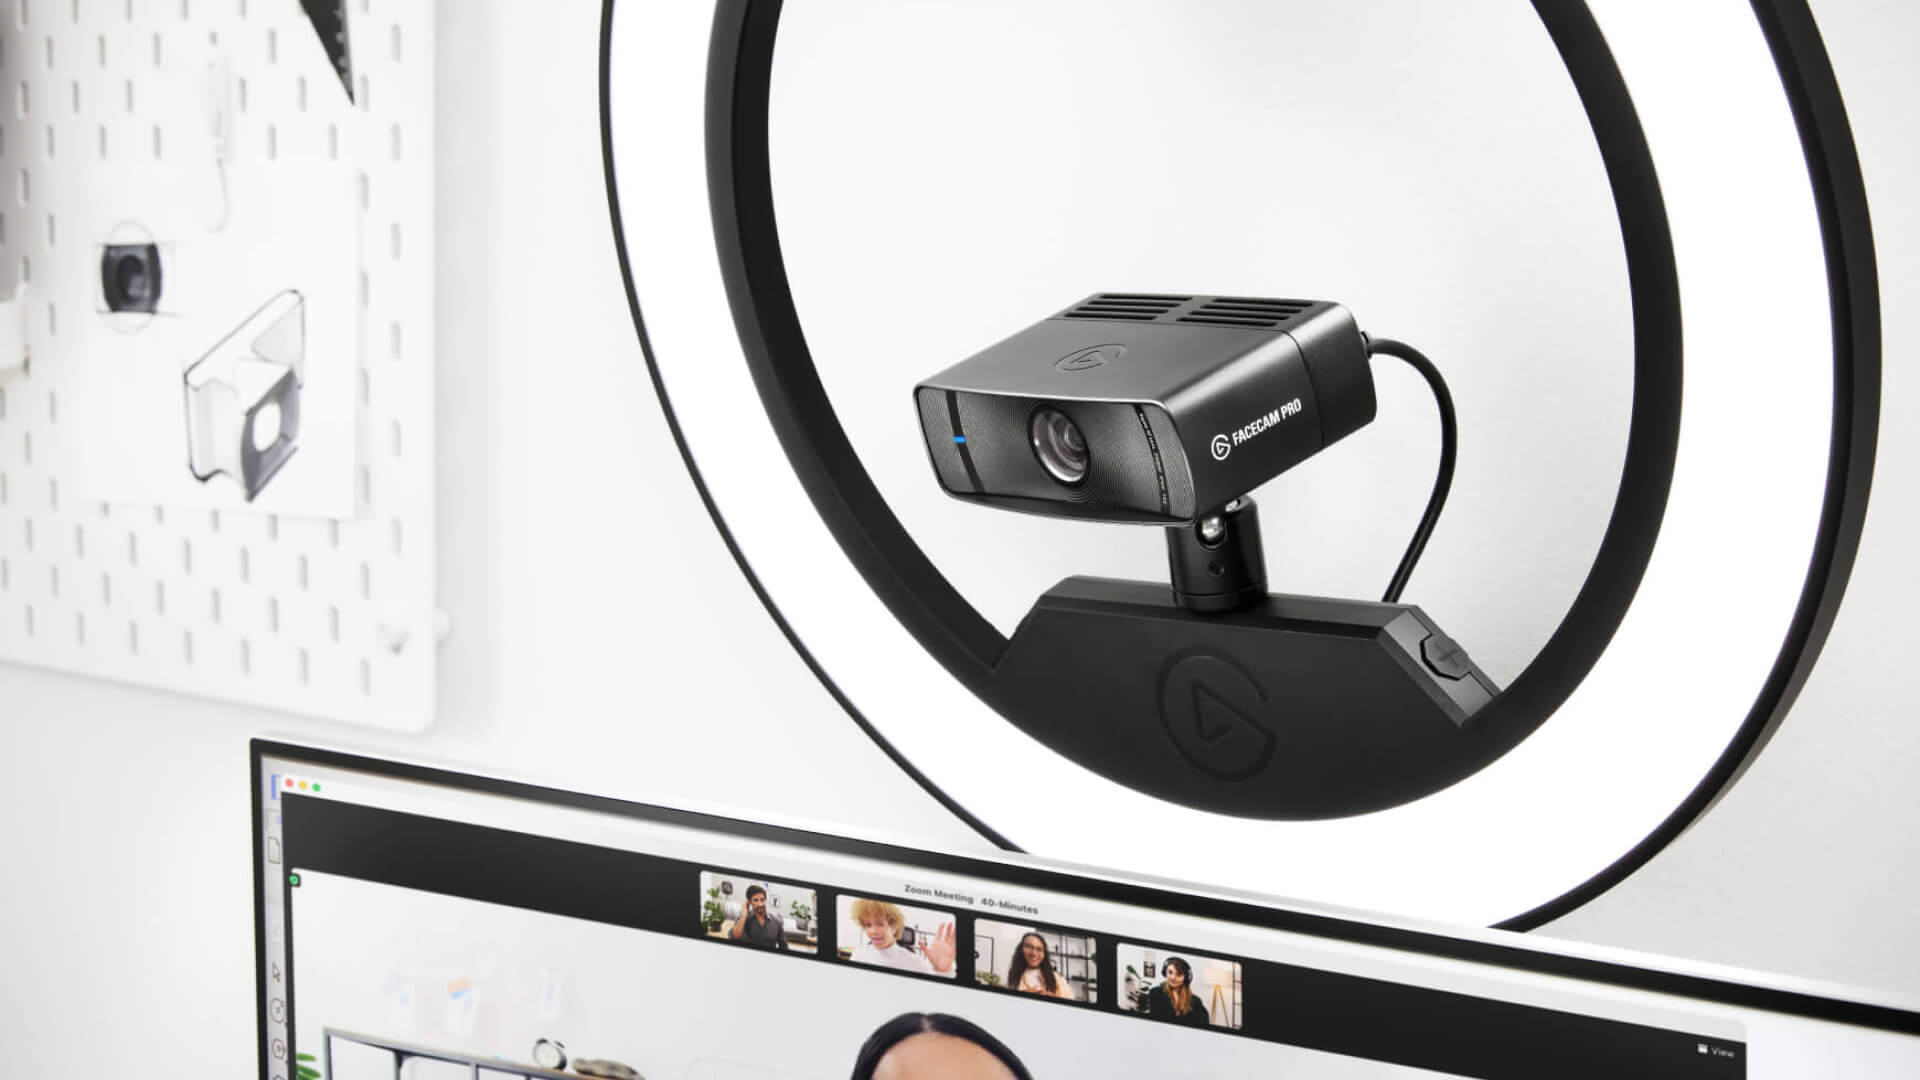  Elgato Facecam Pro, True 4K60 Ultra HD Webcam for Live